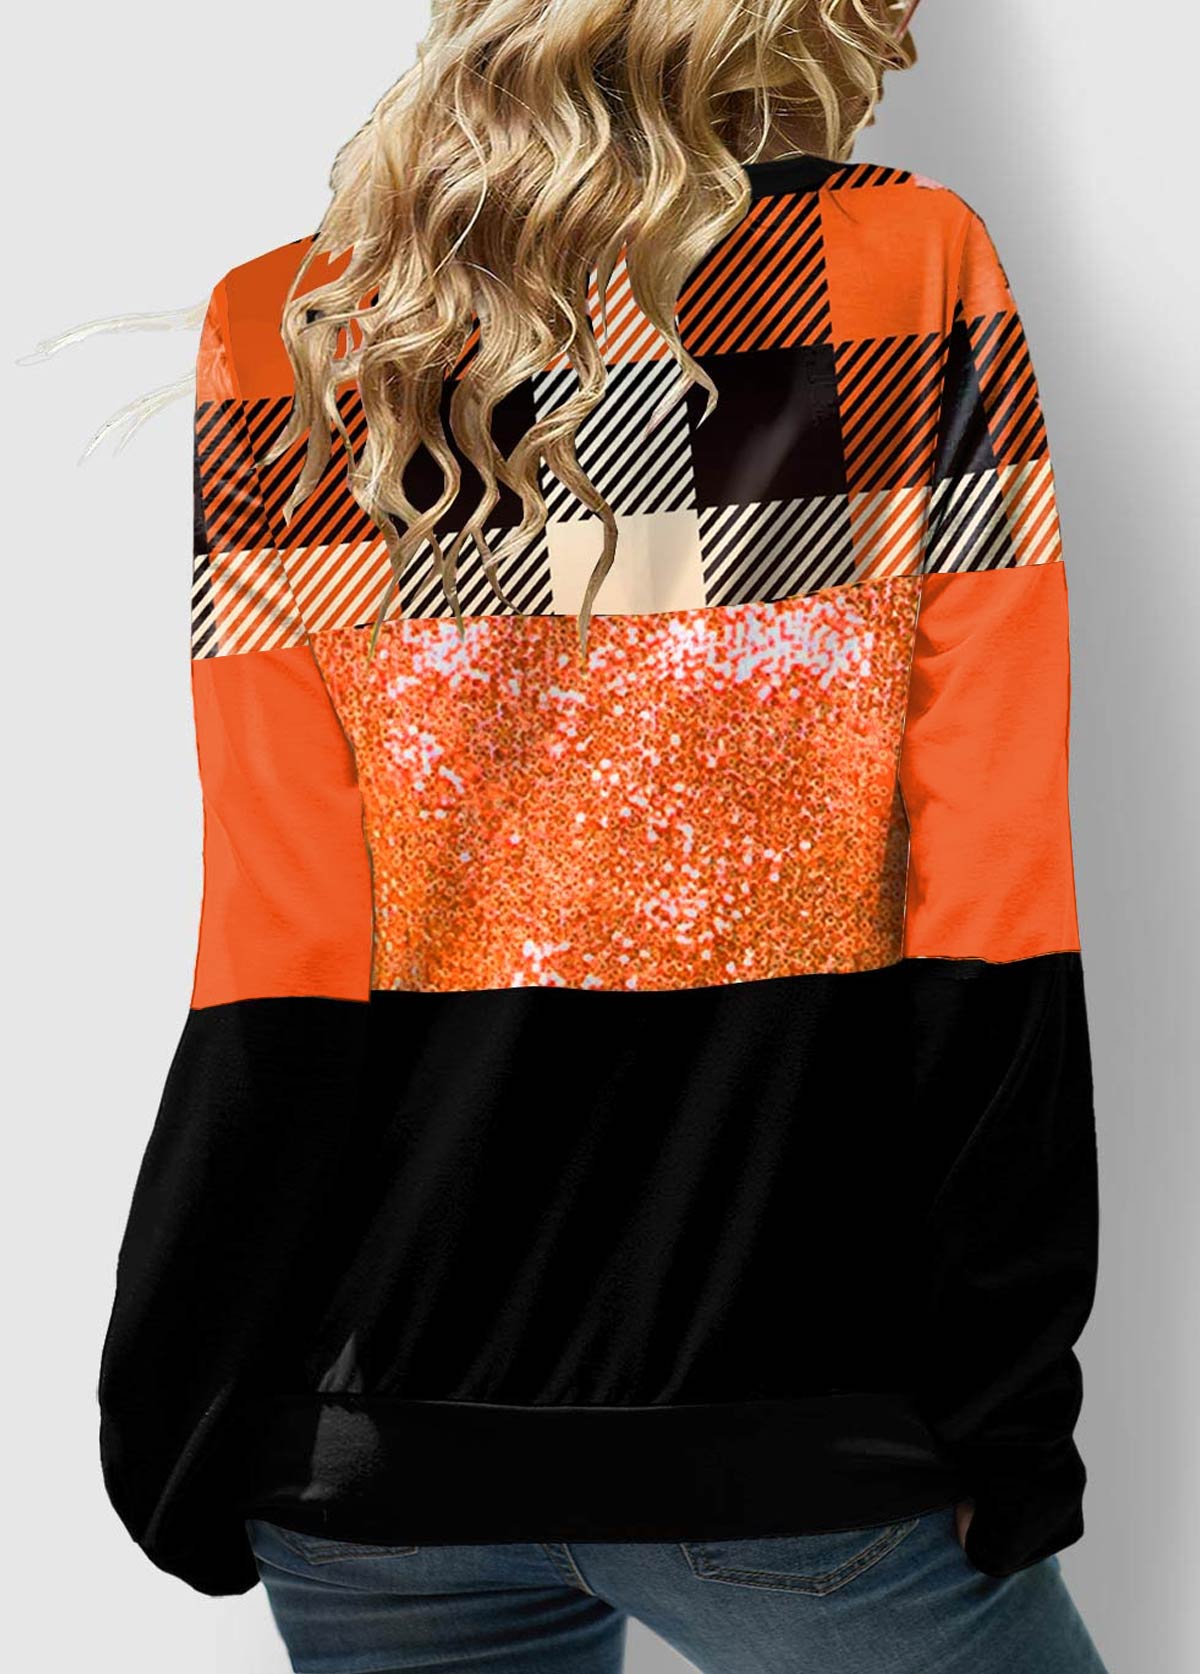 Sequin Plaid Orange Lace Up Sweatshirt